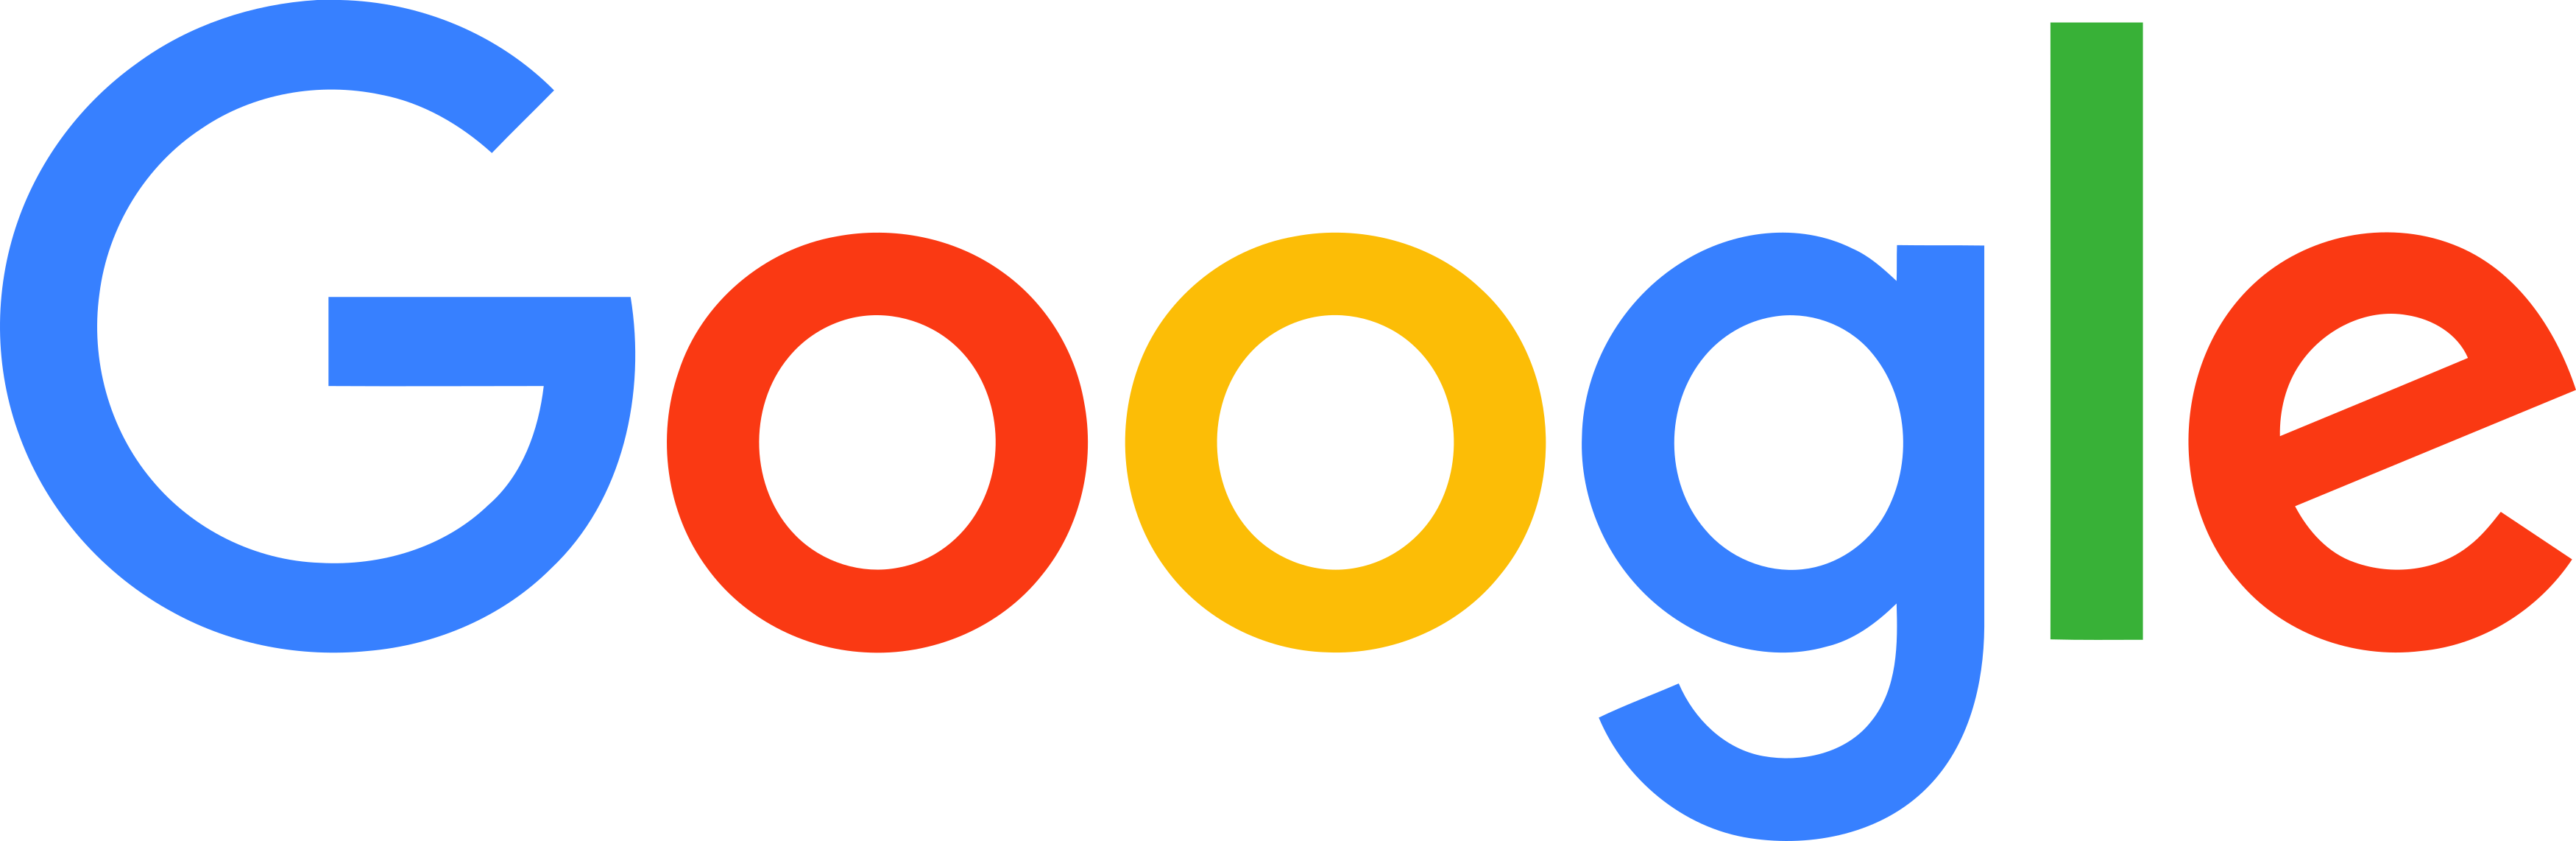 google logo 1 - Google Logo